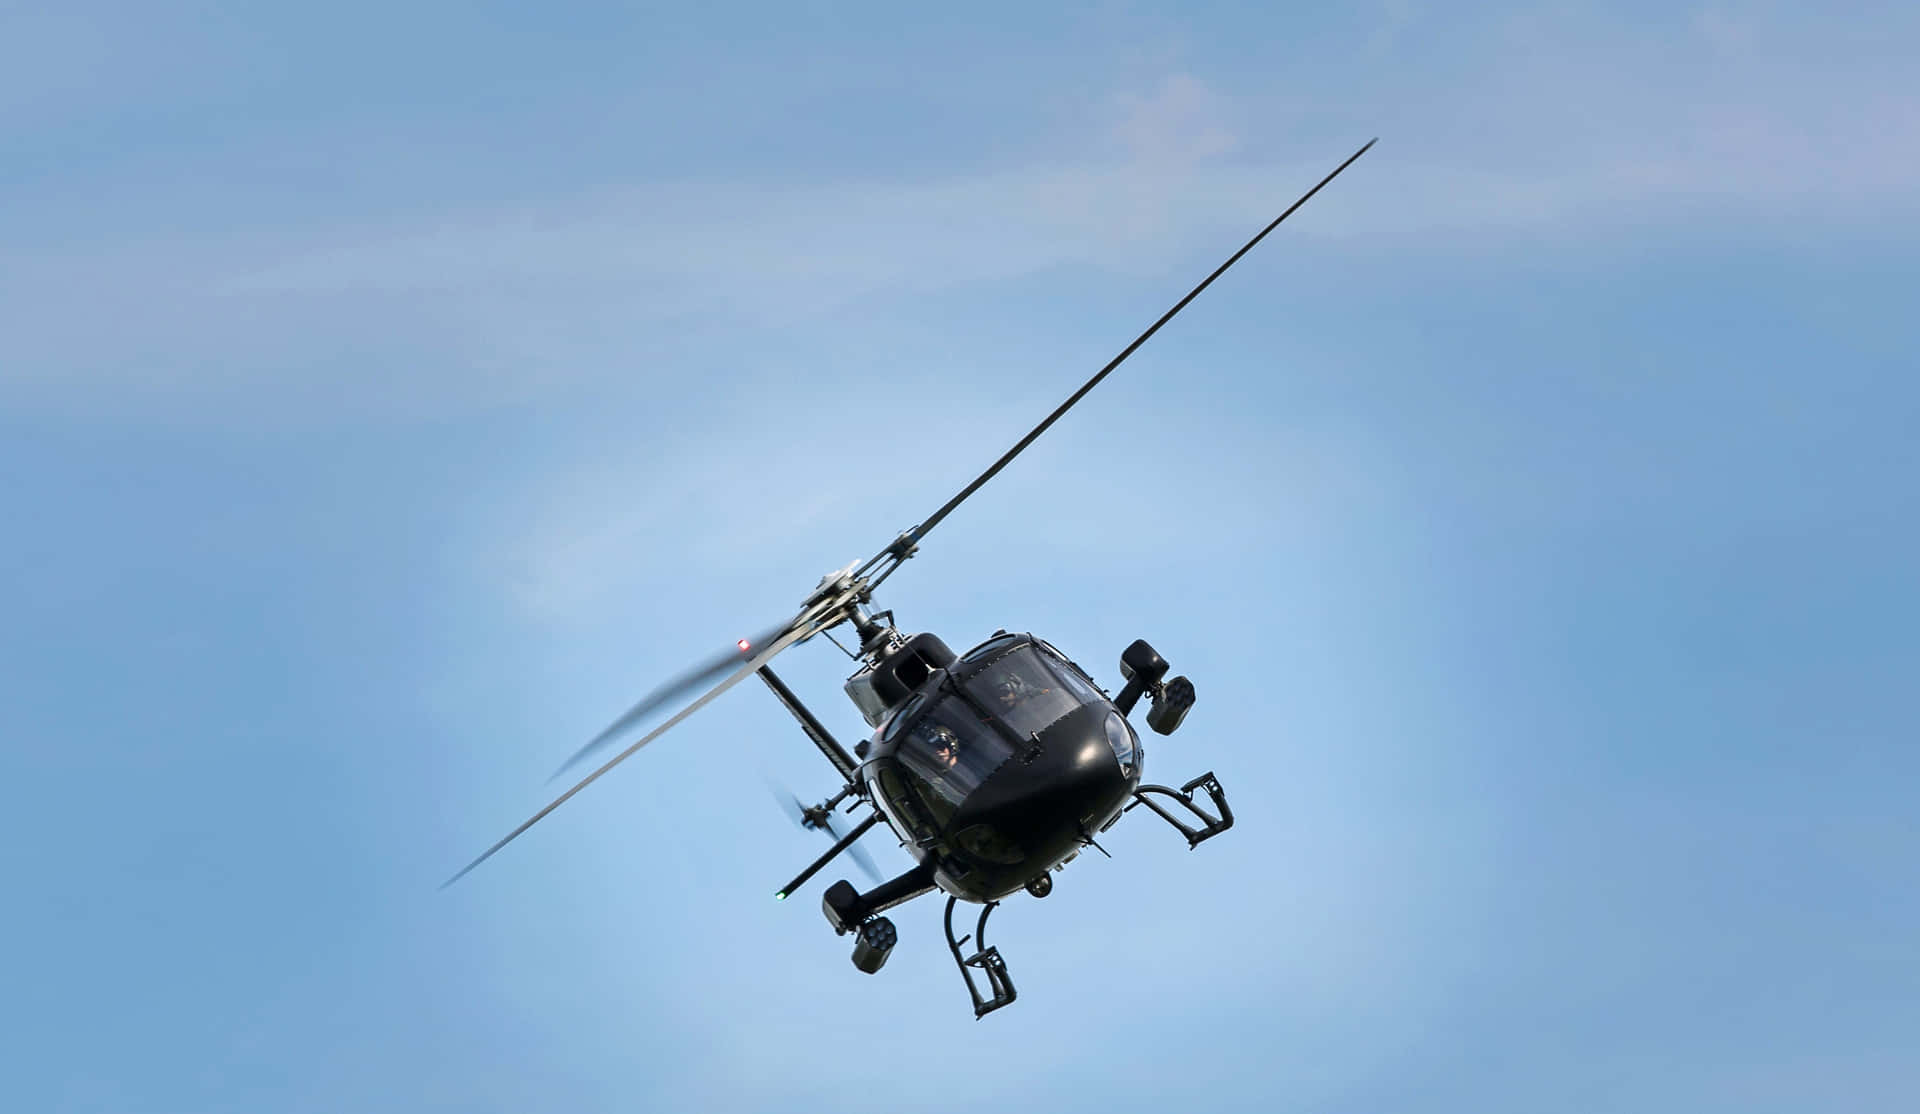 Helikopterbild In 3926 X 2277 Auflösung.